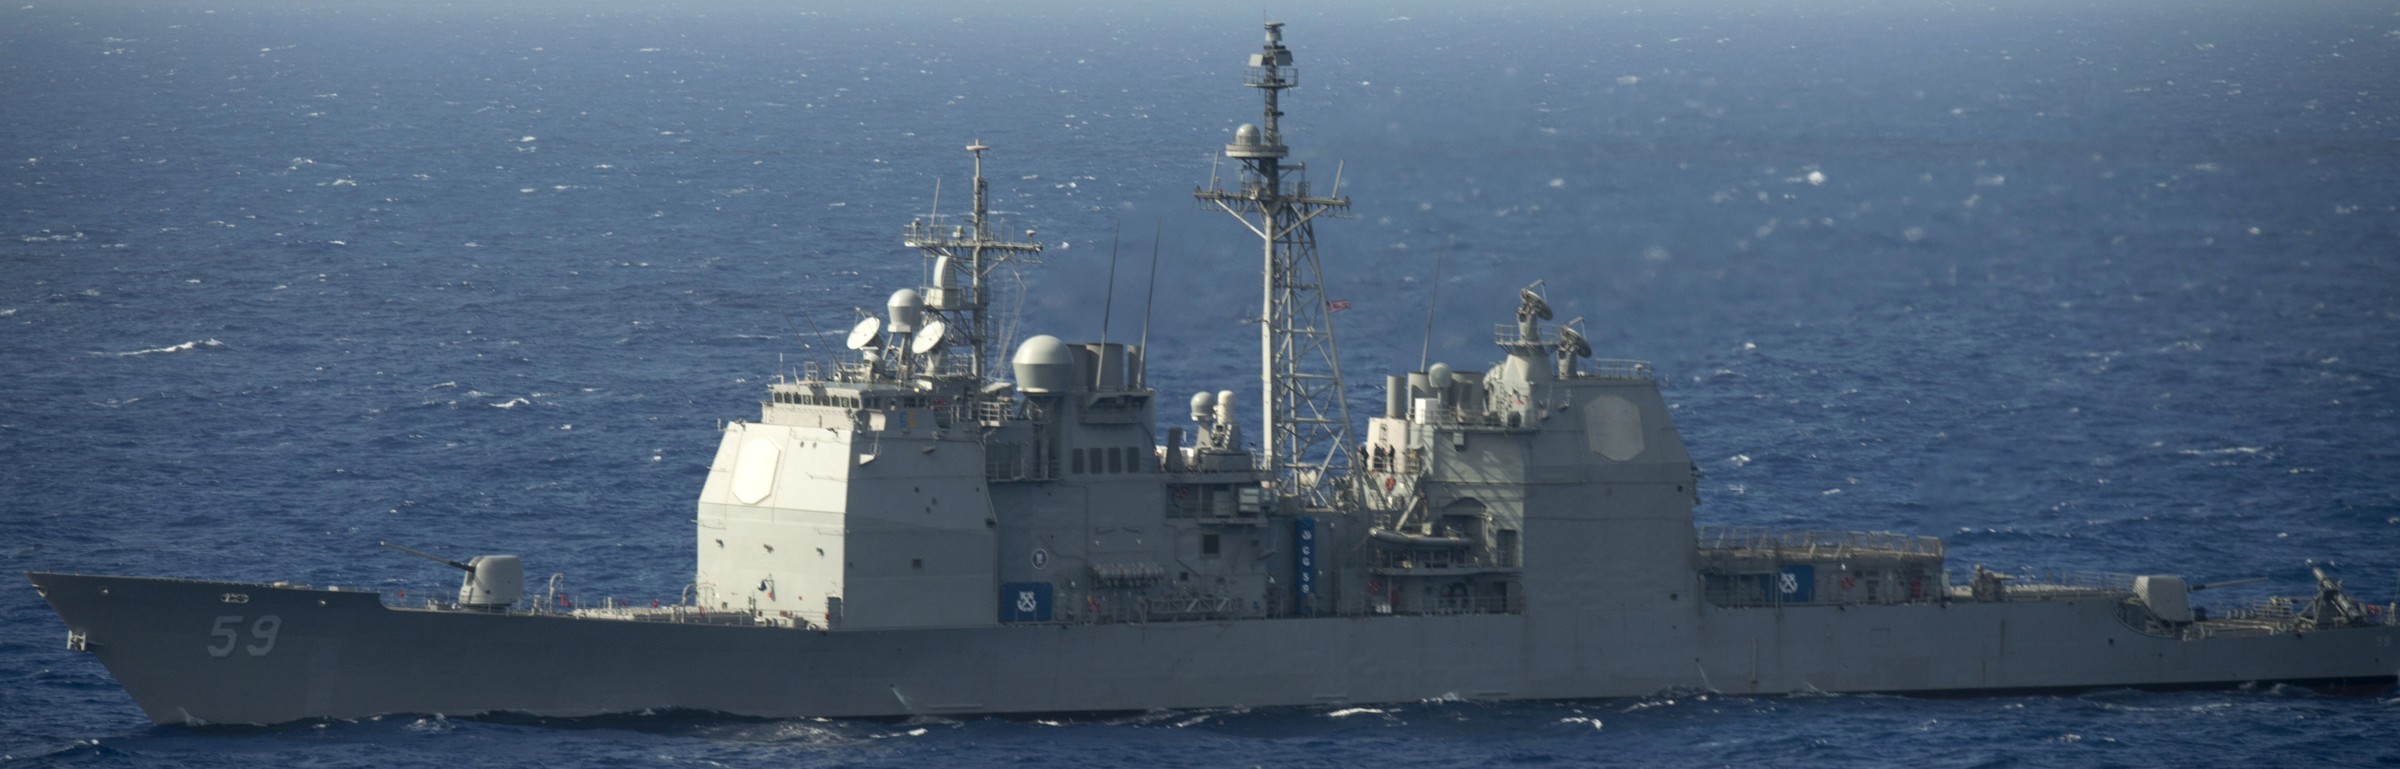 cg-59 uss princeton ticonderoga class guided missile cruiser aegis us navy 55